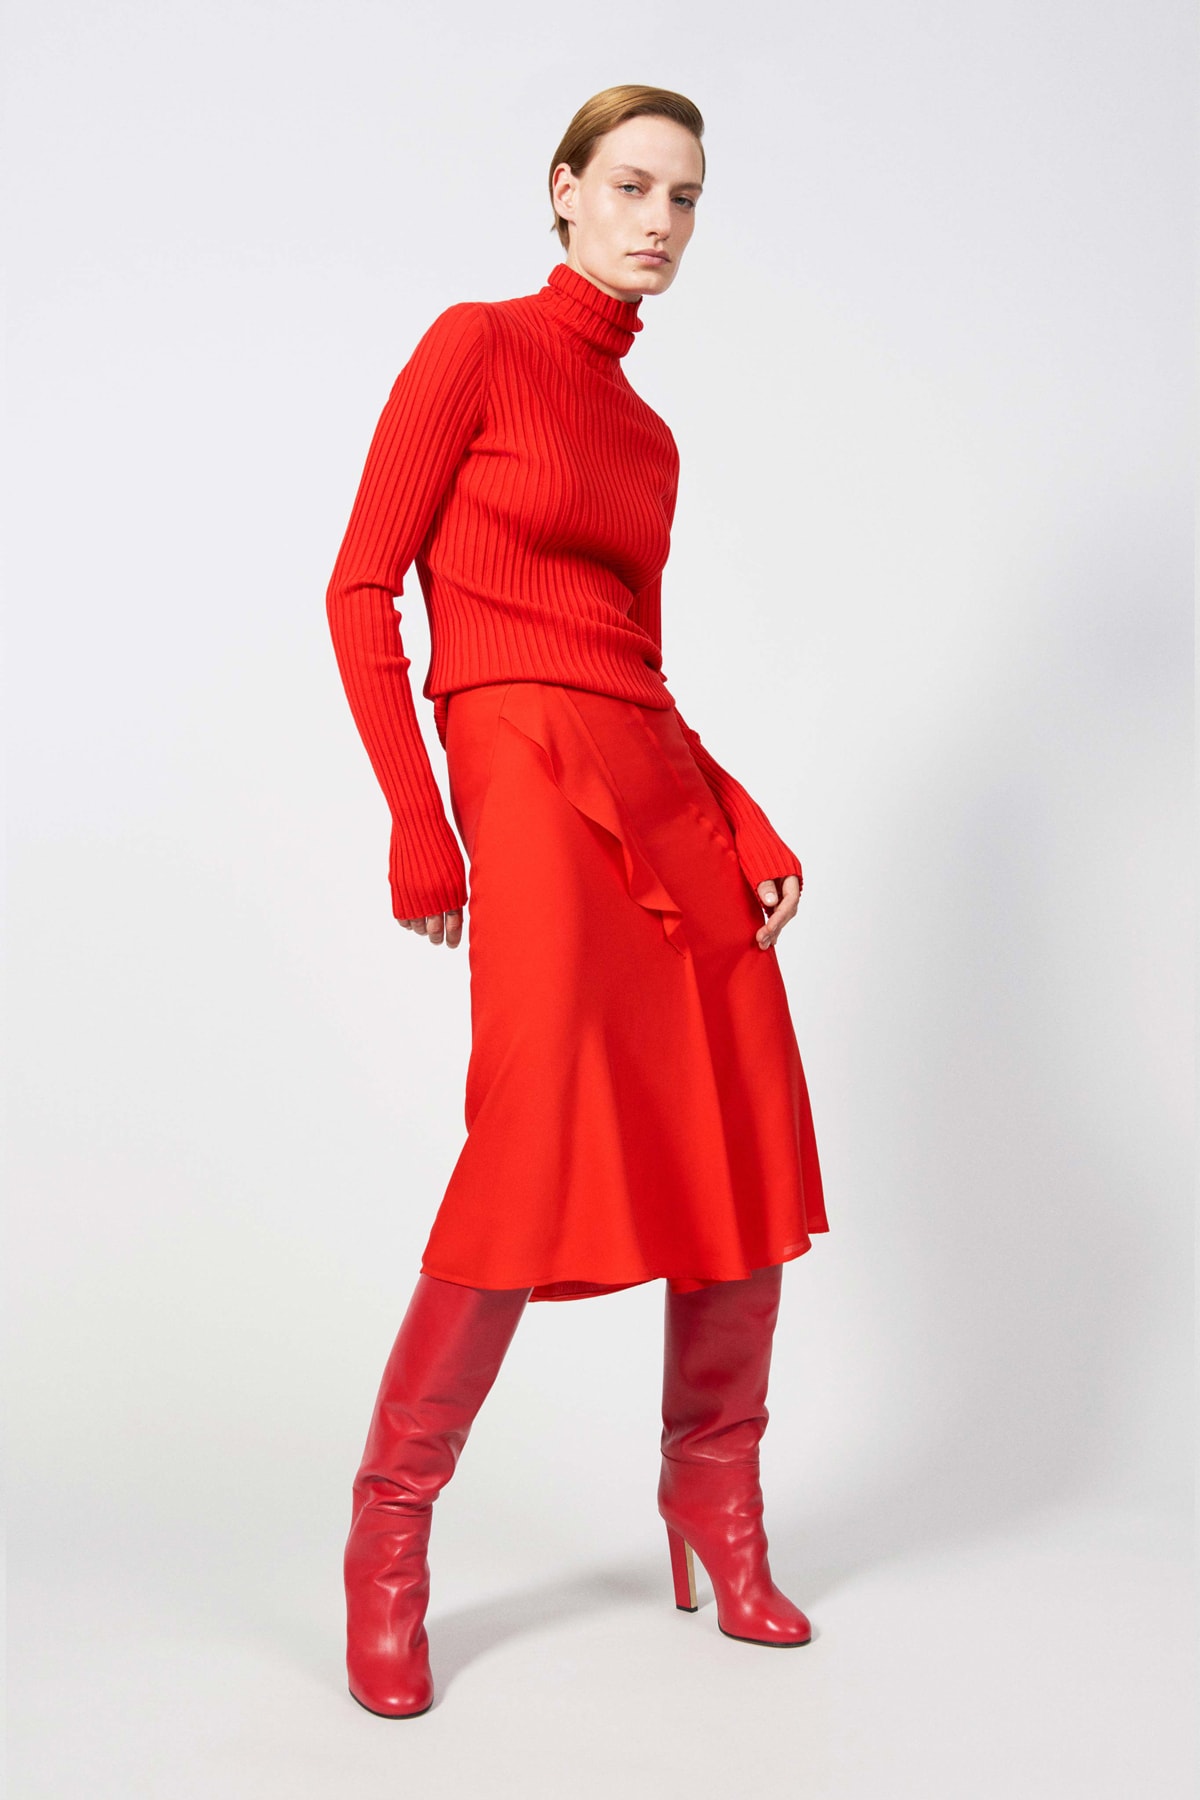 Victoria Beckham Resort 2019 Collection Lookbook Longsleeve Turtleneck Skirt Leather Boots Red